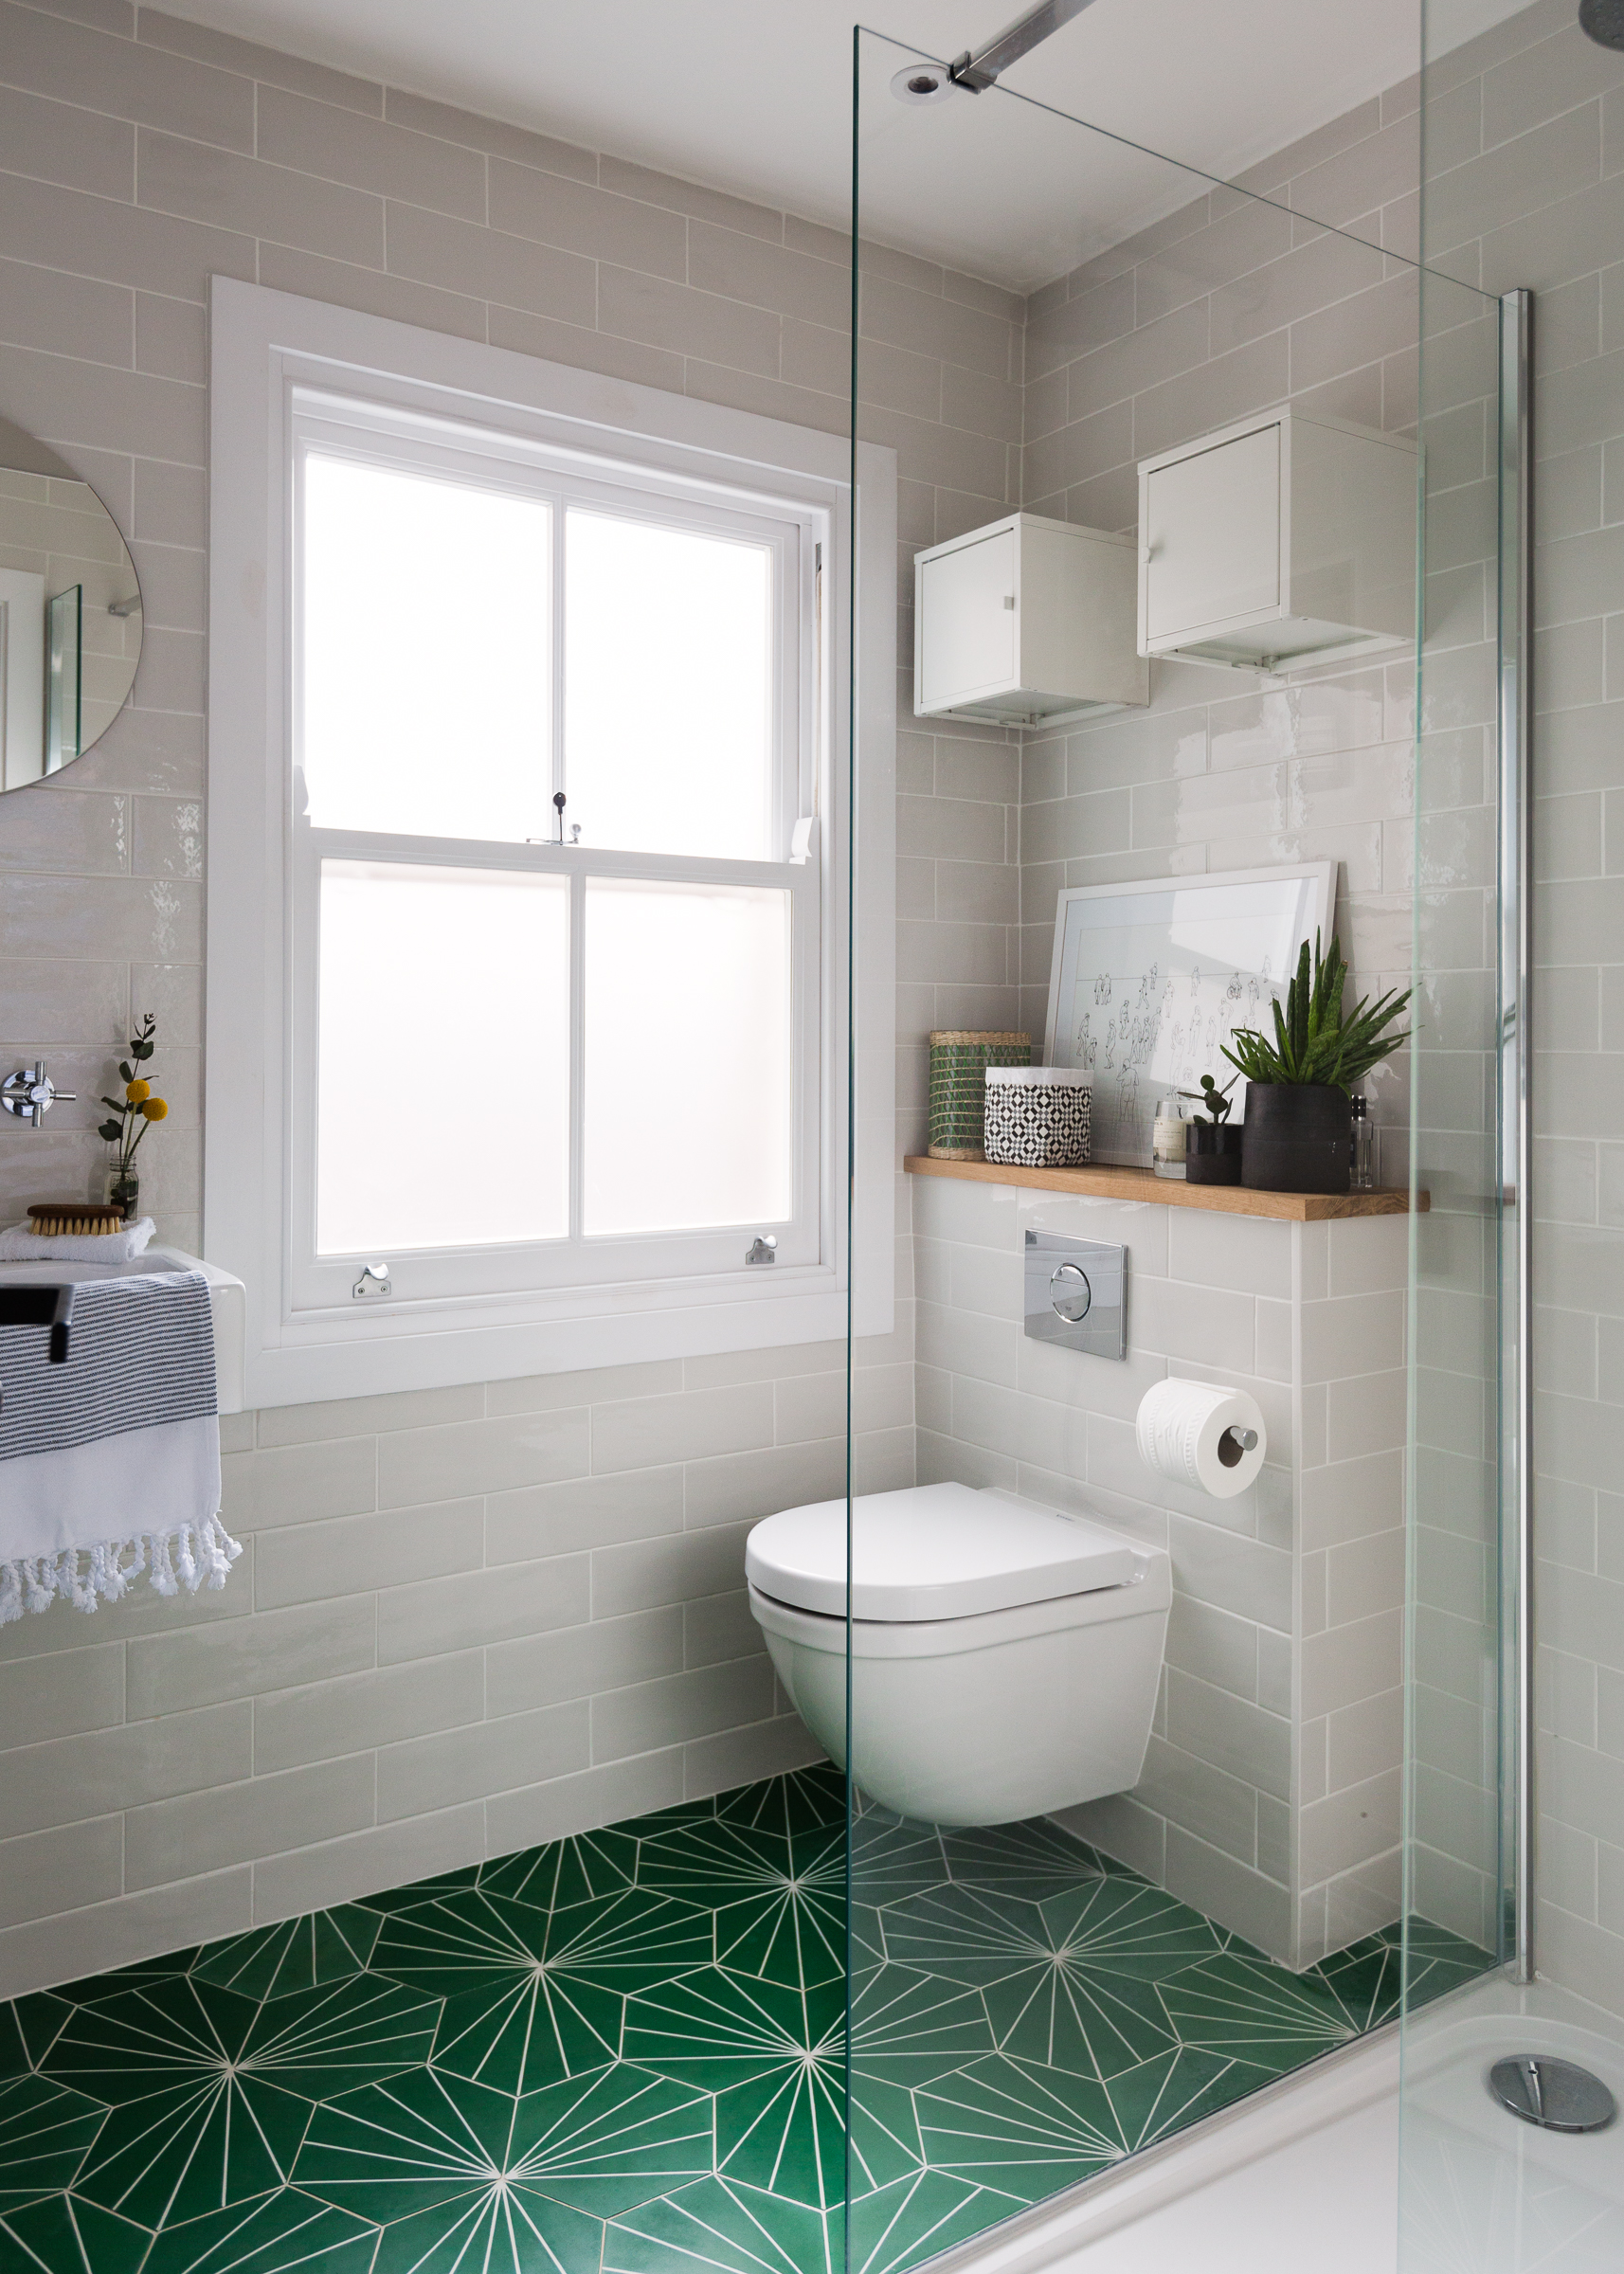 Bathroom tile designs bathroom floor tile DMFEHSX